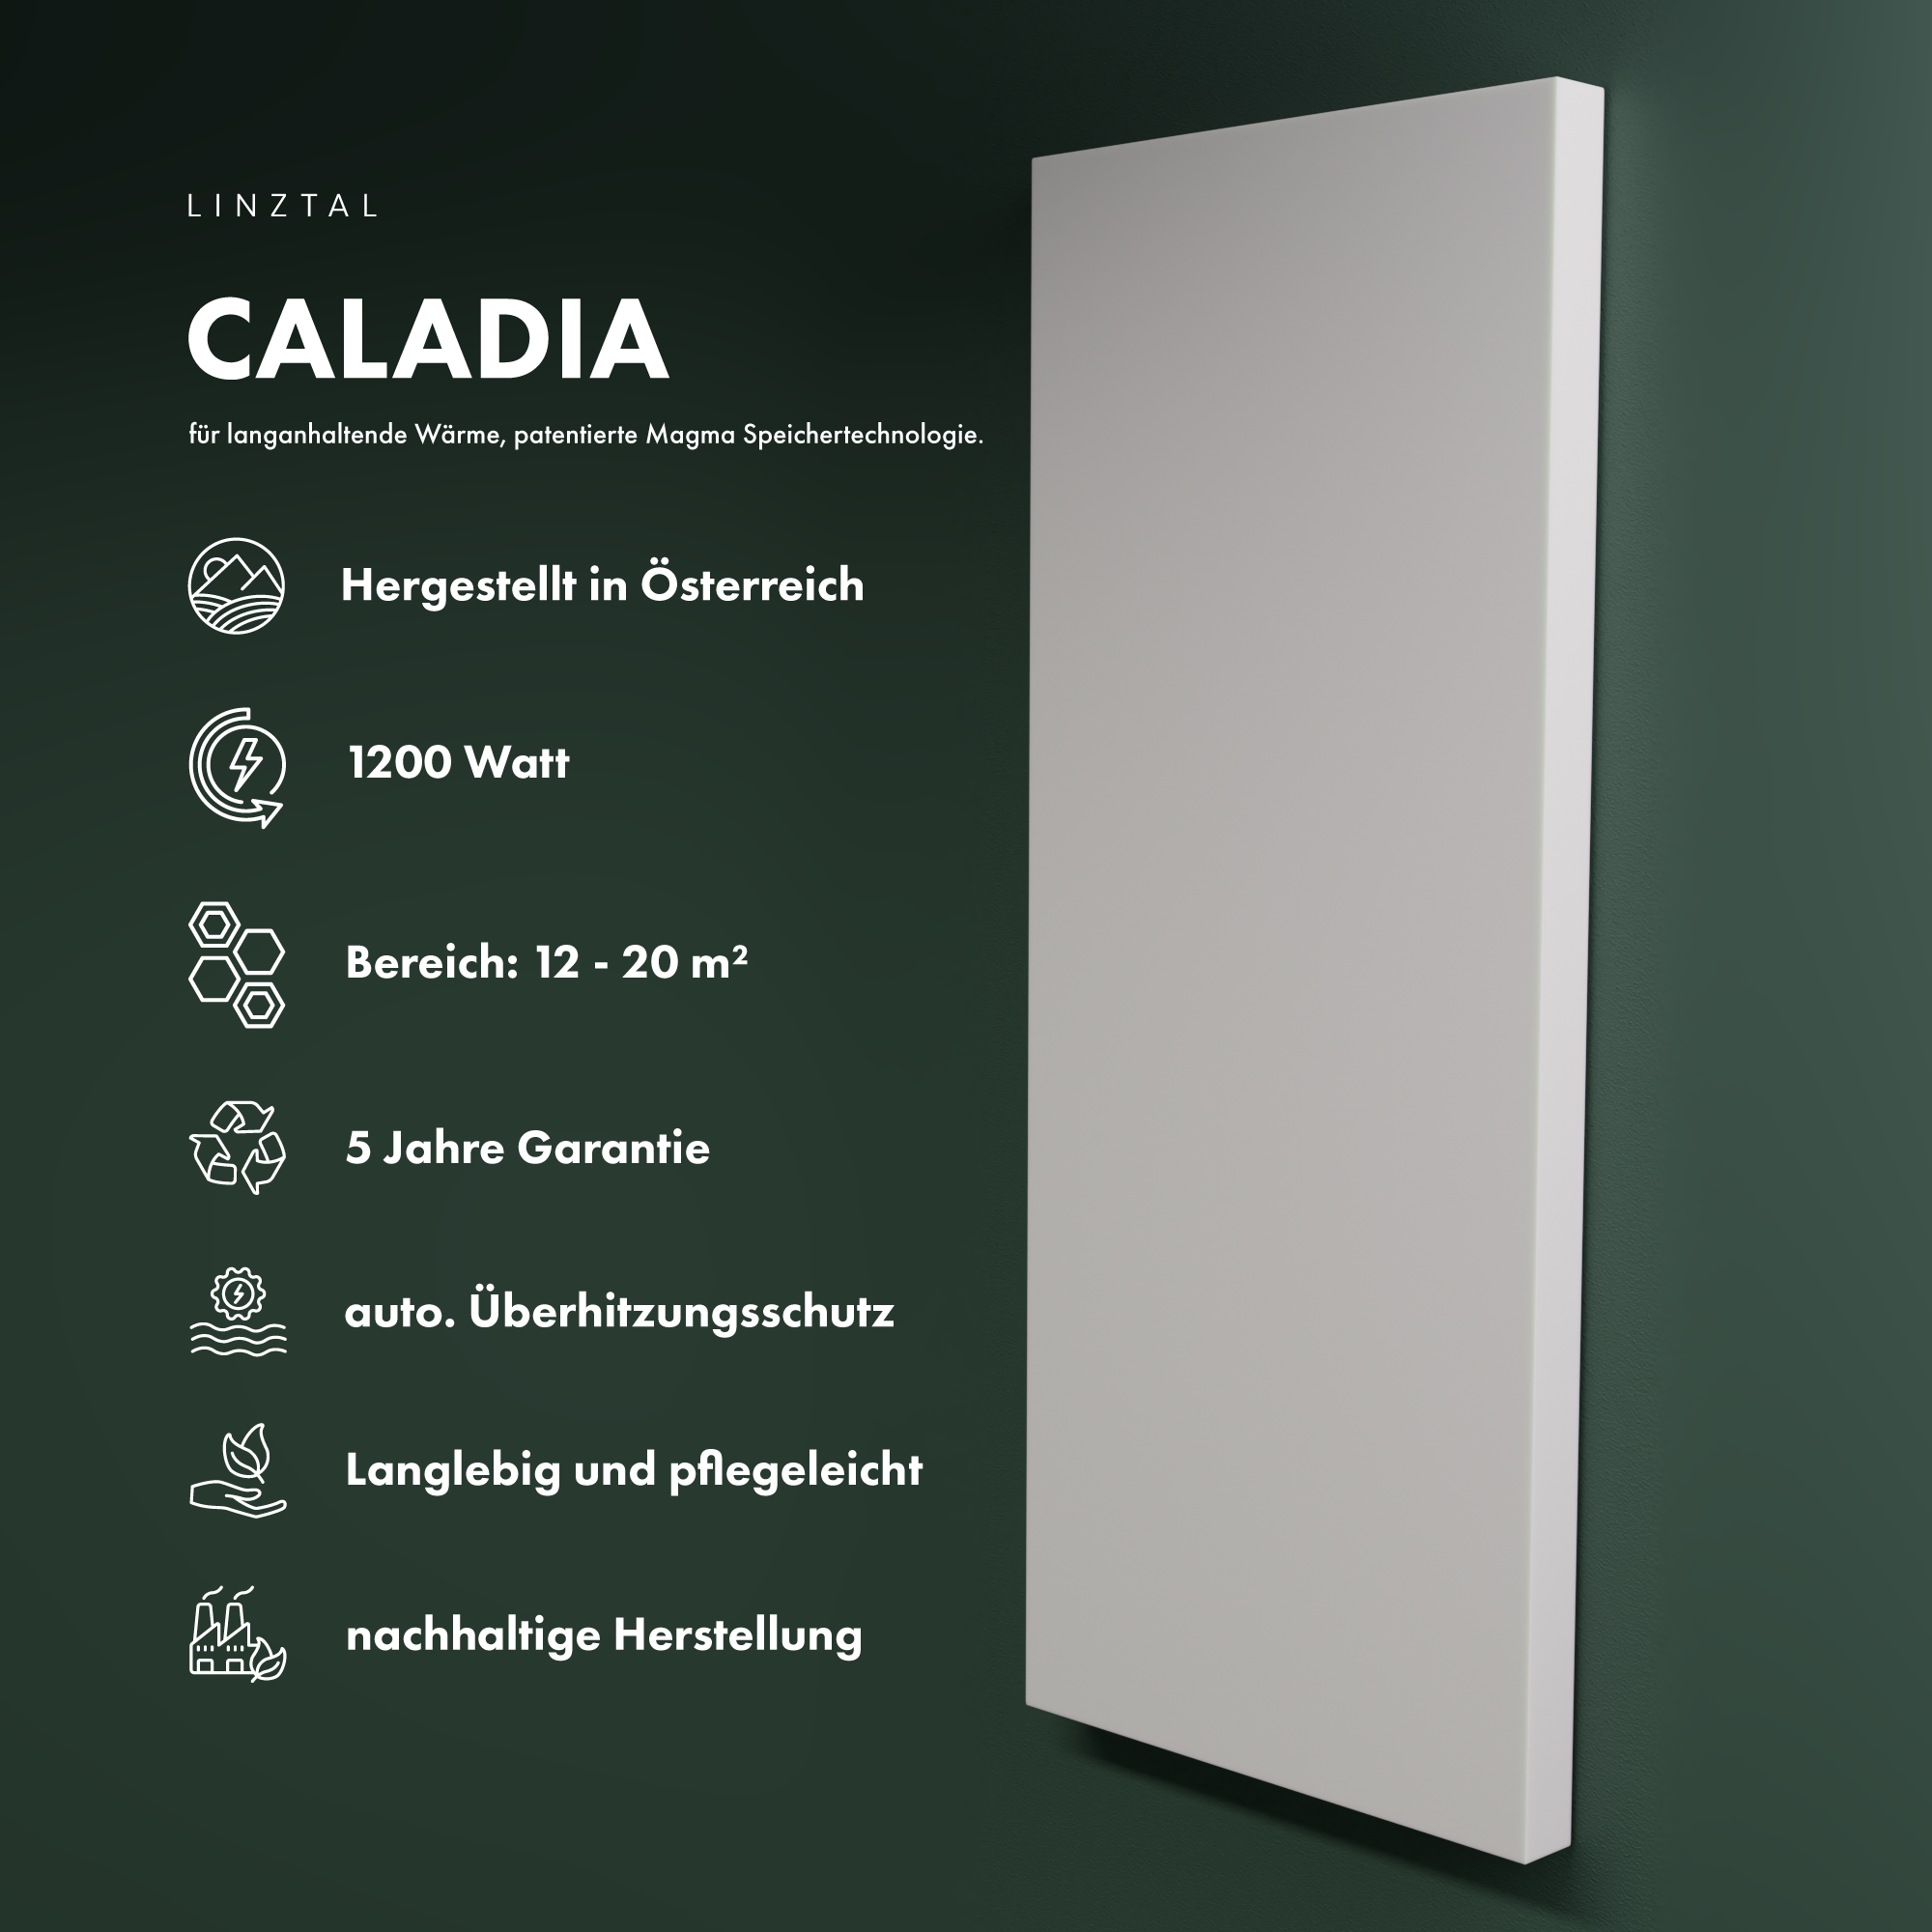 (1200 m²) Caladia Raumgröße: LINZTAL 20 Watt, Infrarotheizung